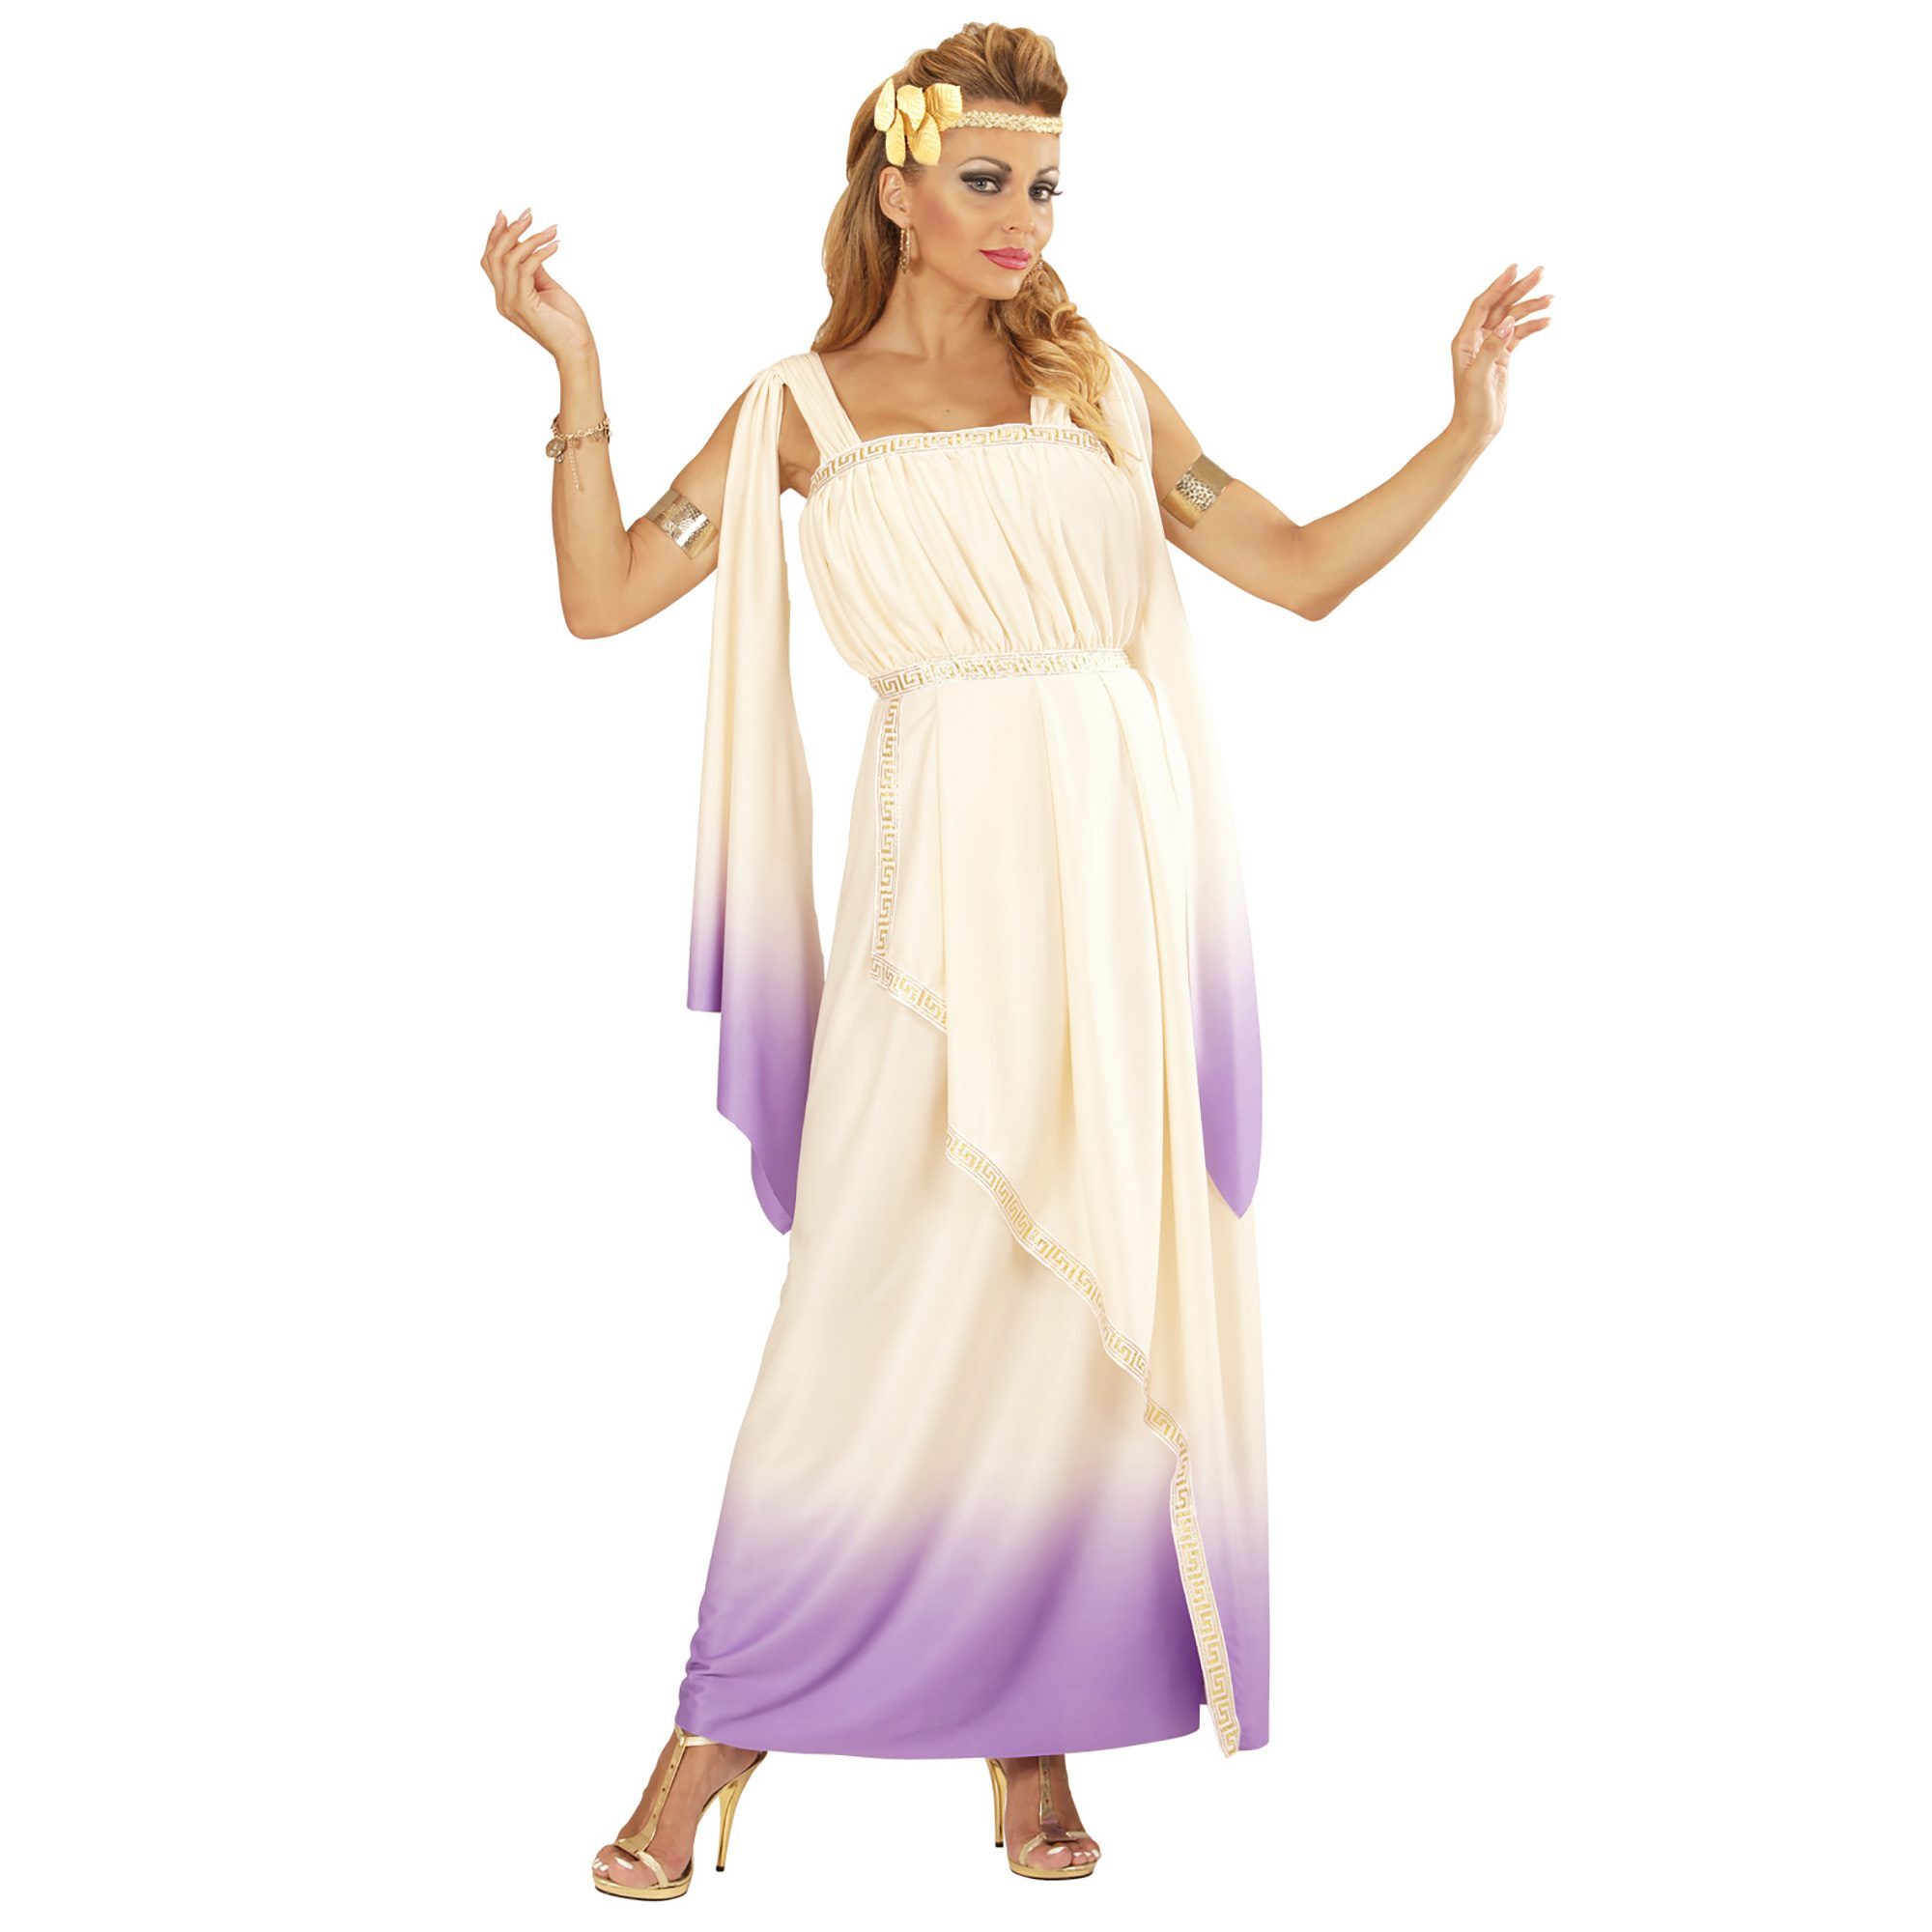 Griekse godin creme paars oudheid Koningin outfit kostuum